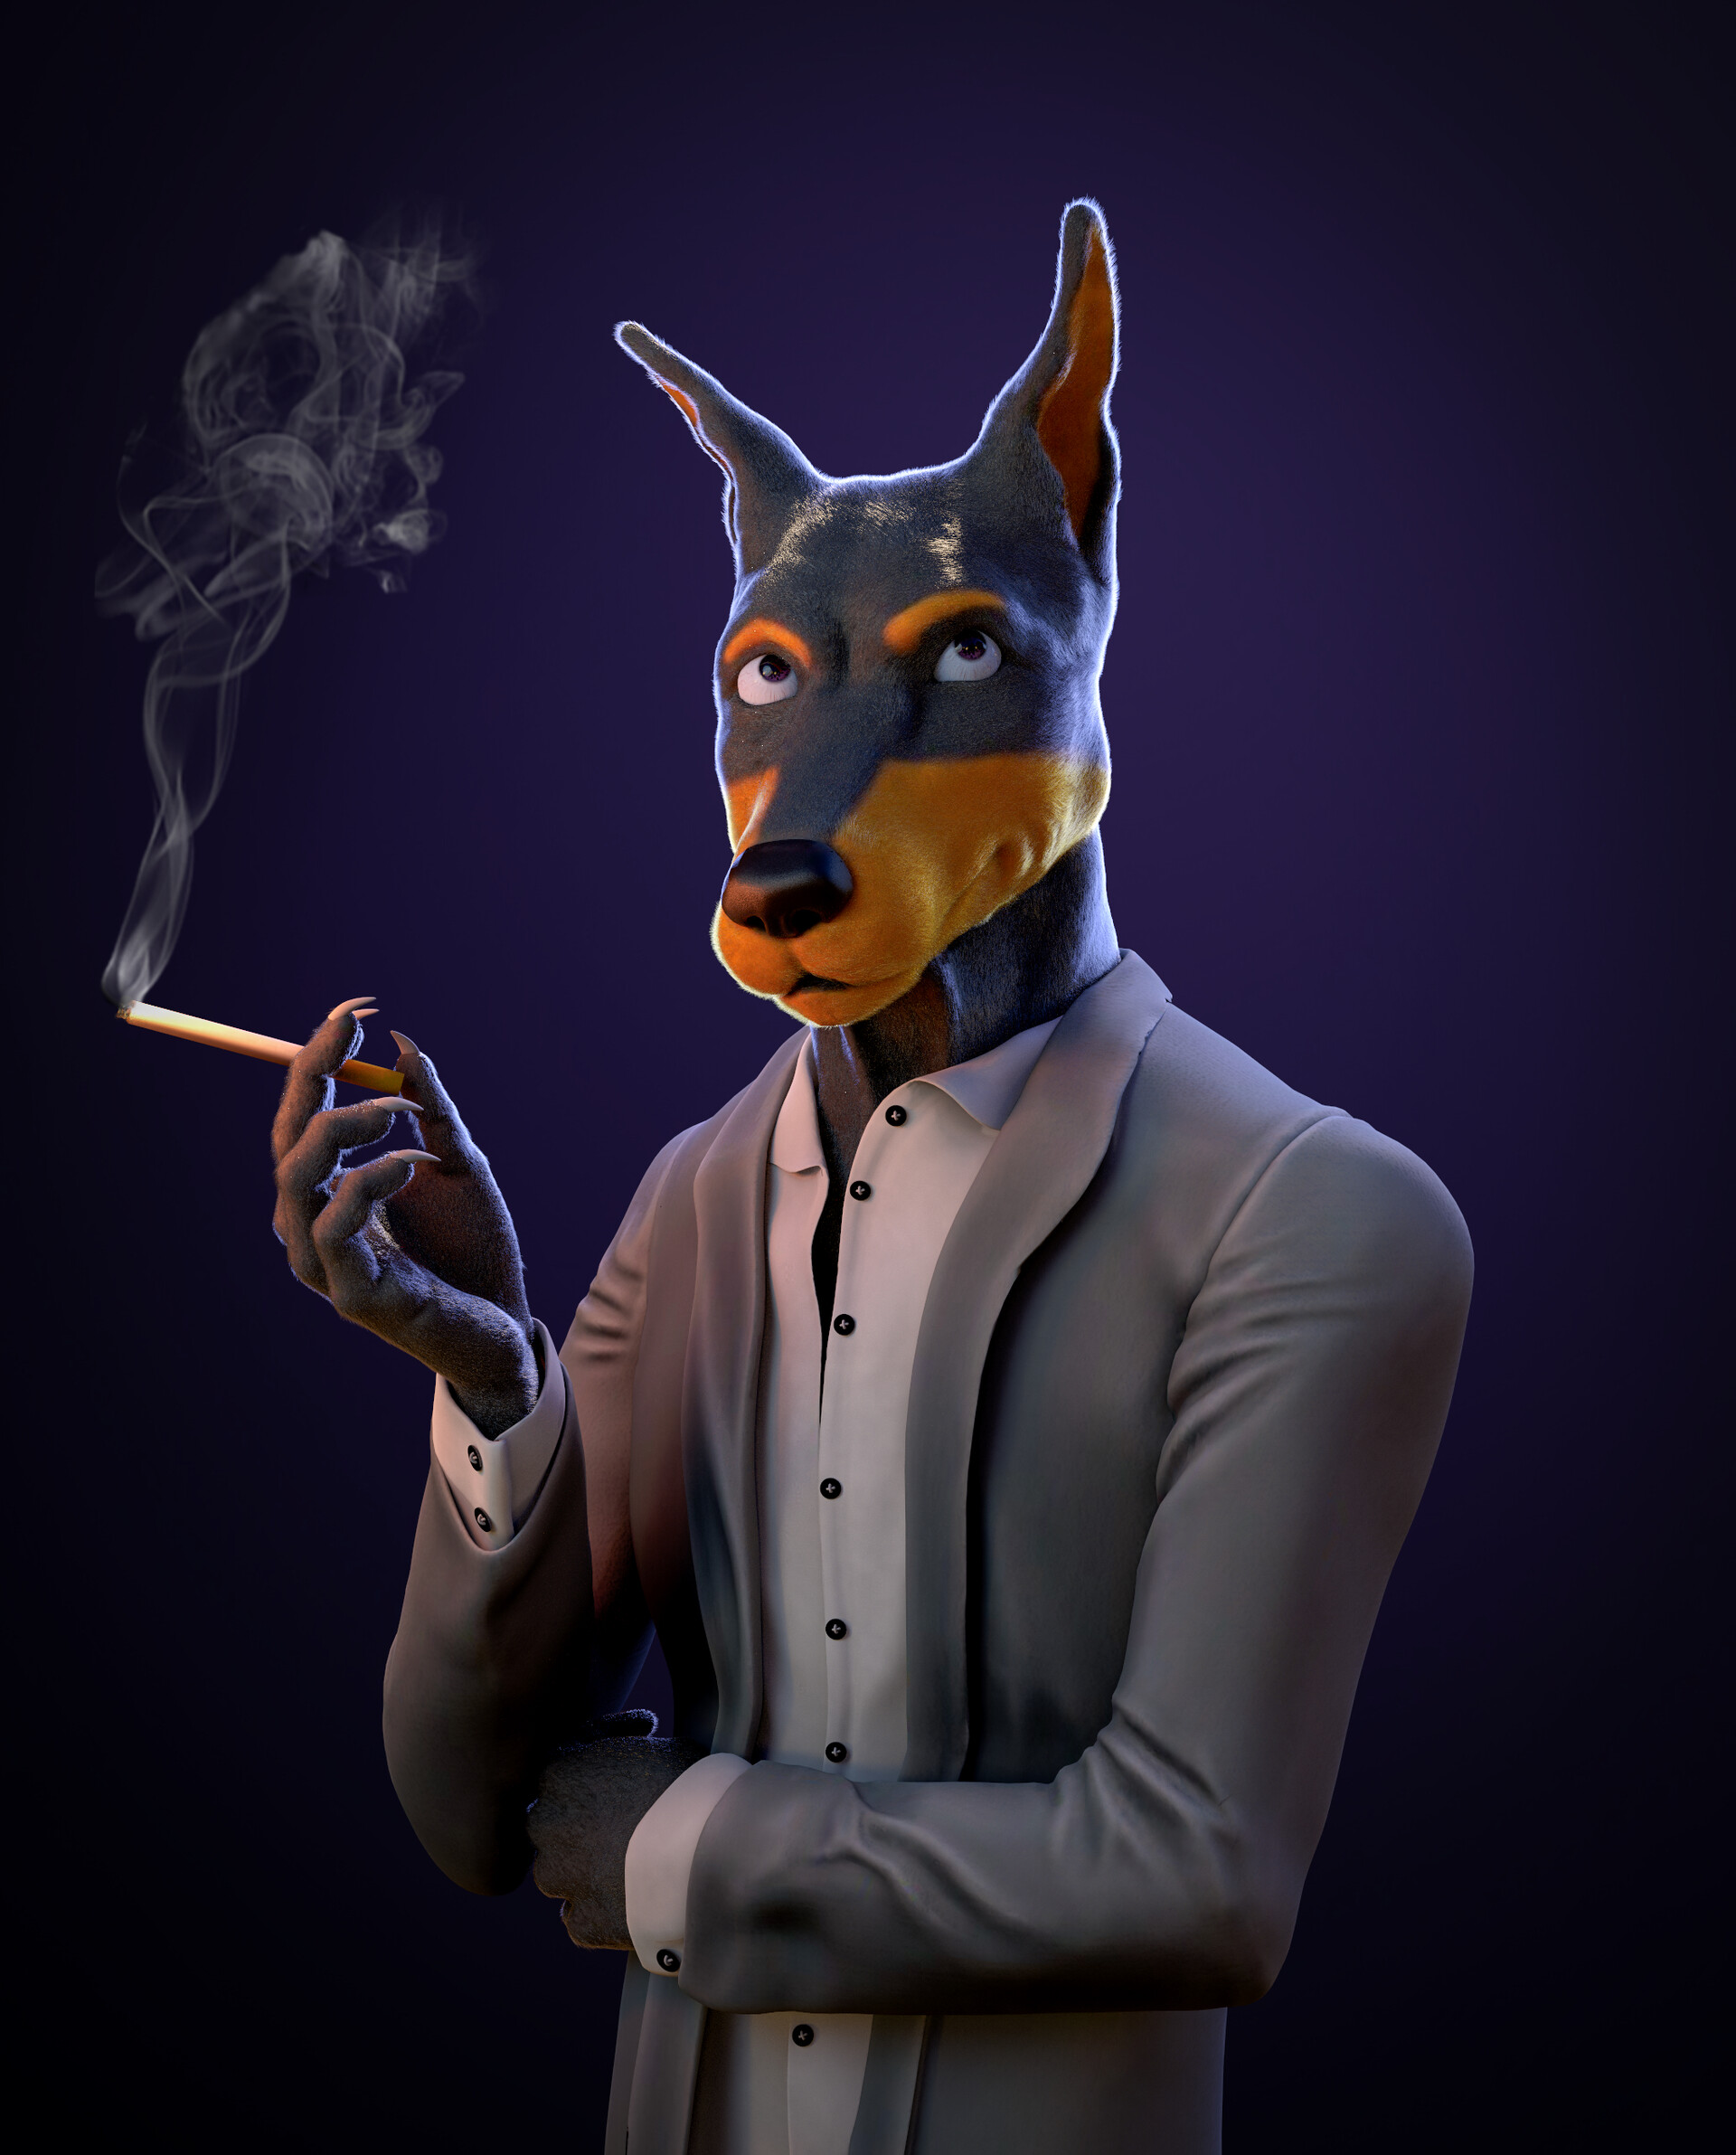 ArtStation - A smoking dog